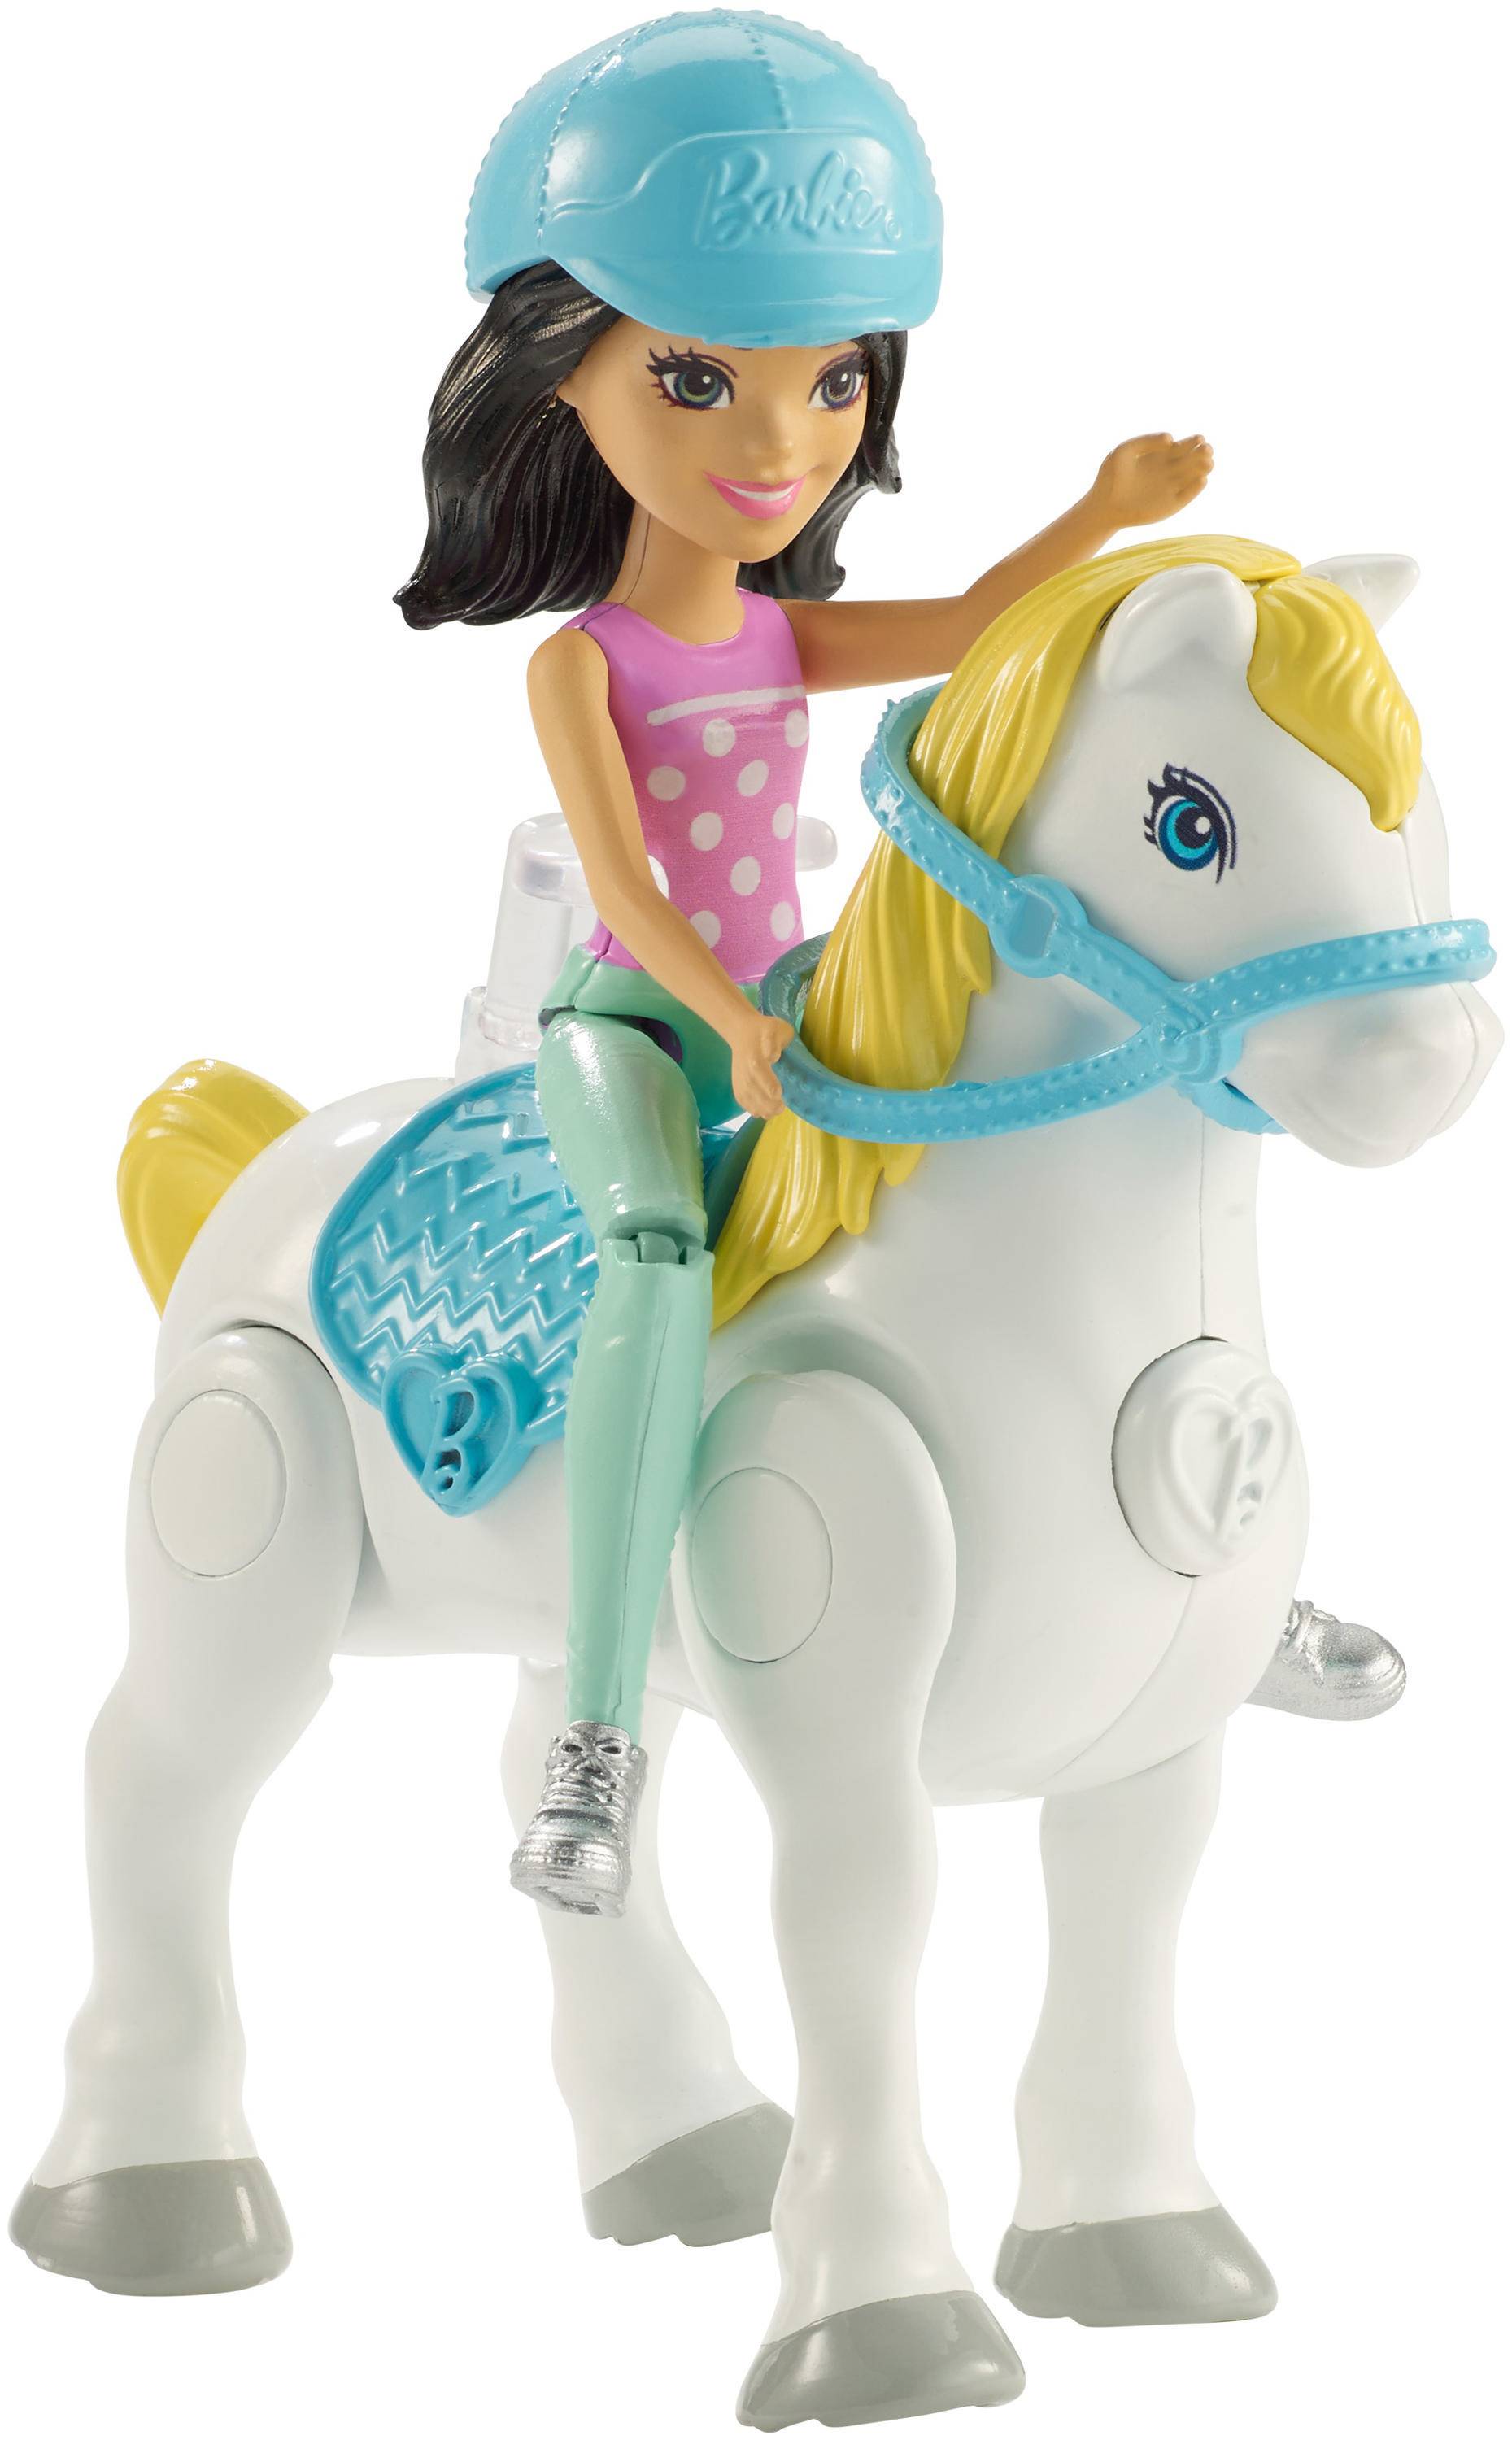 Лошадки го го. Набор Barbie в движении мини-кукла с пони, 11 см, fhv60. Куклы Barbie on the go. Кукла Барби с лошадкой. Мини кукла с лошадкой.